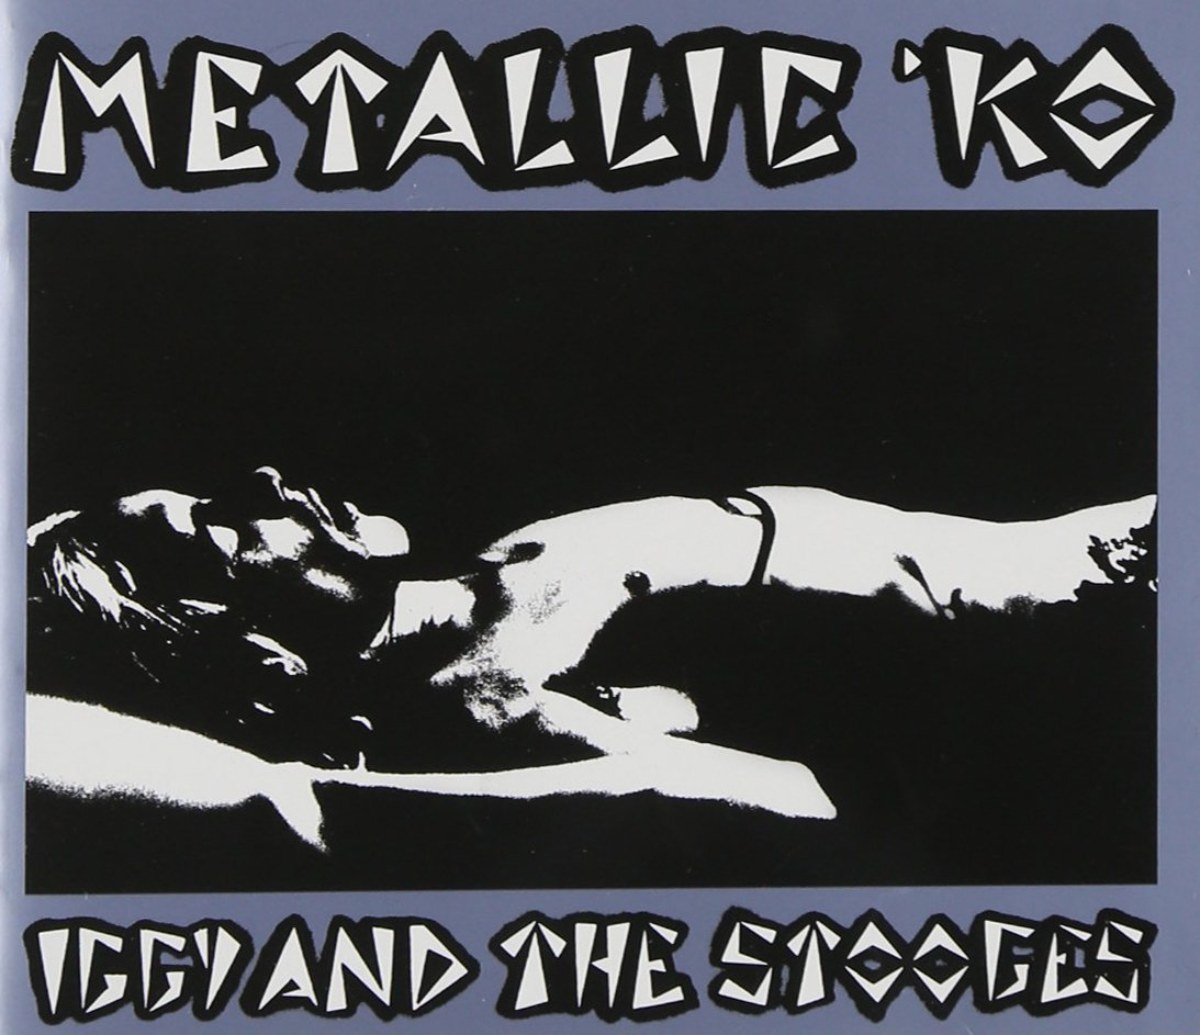 The Stooges - Metallic K.O. (1976)